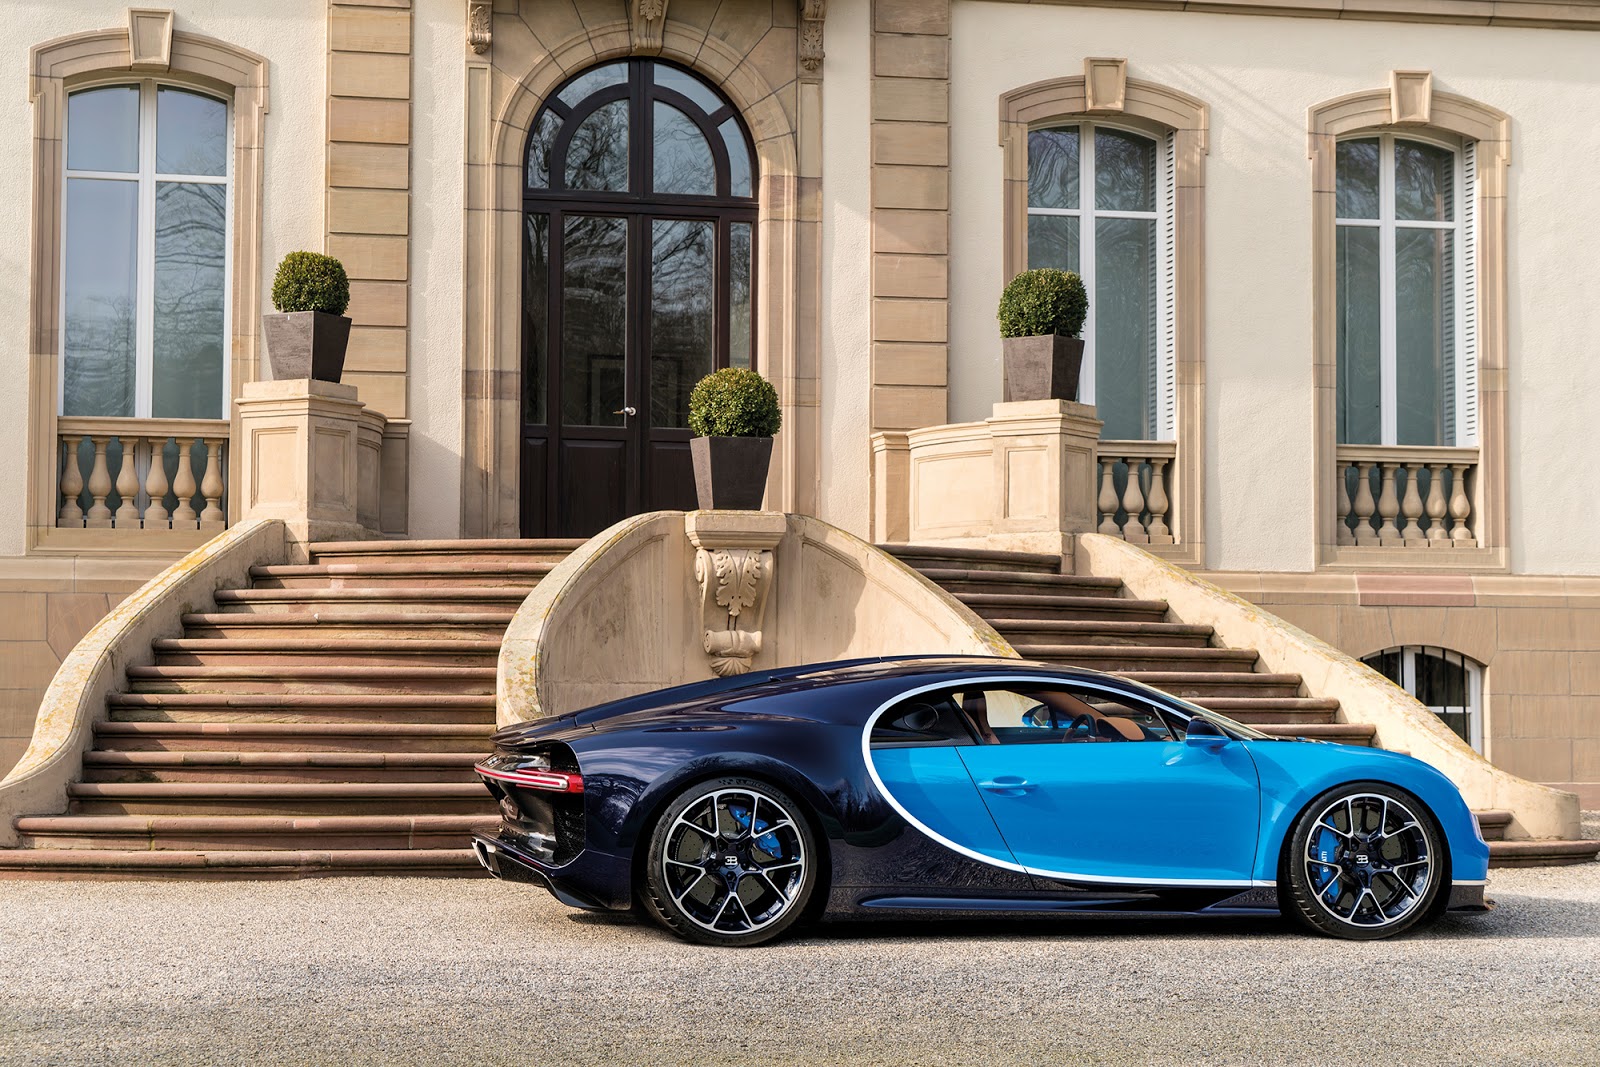 HD Wallpapers : Bugatti Chiron 2017 HD Wallpapers